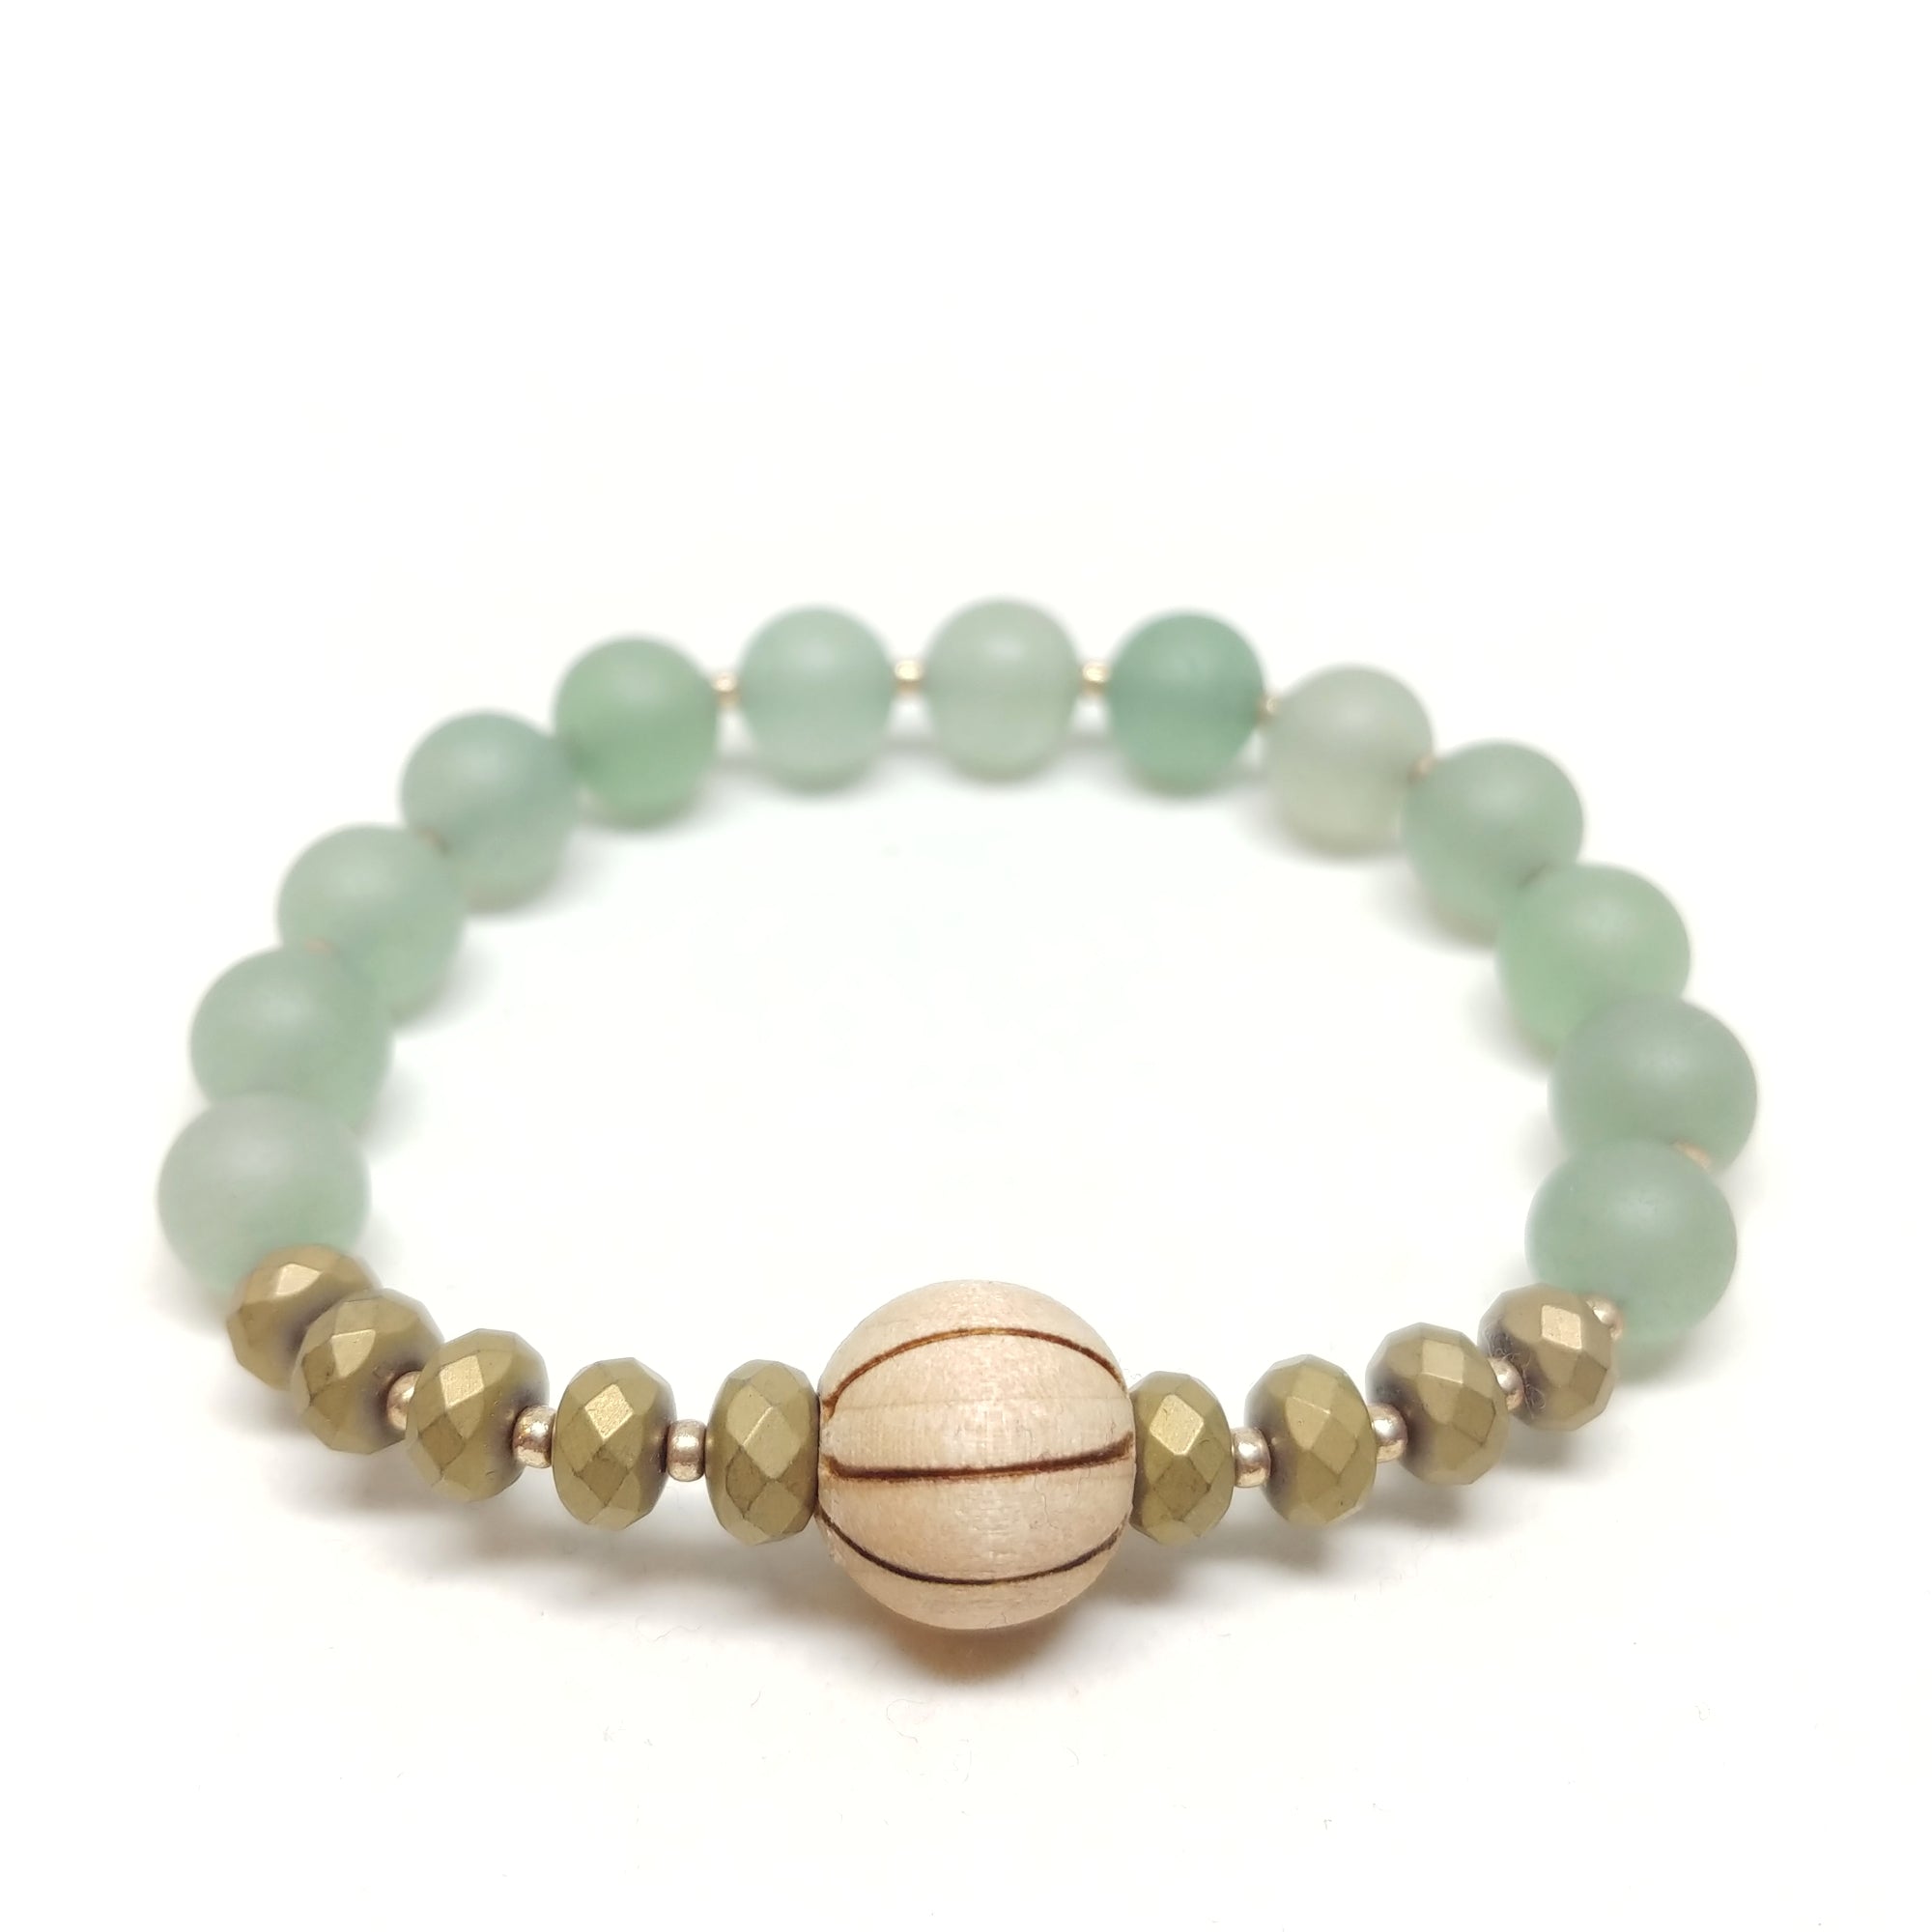 Saguaro stretch bracelet, aventurine, hematite, wood, gold spacer beads